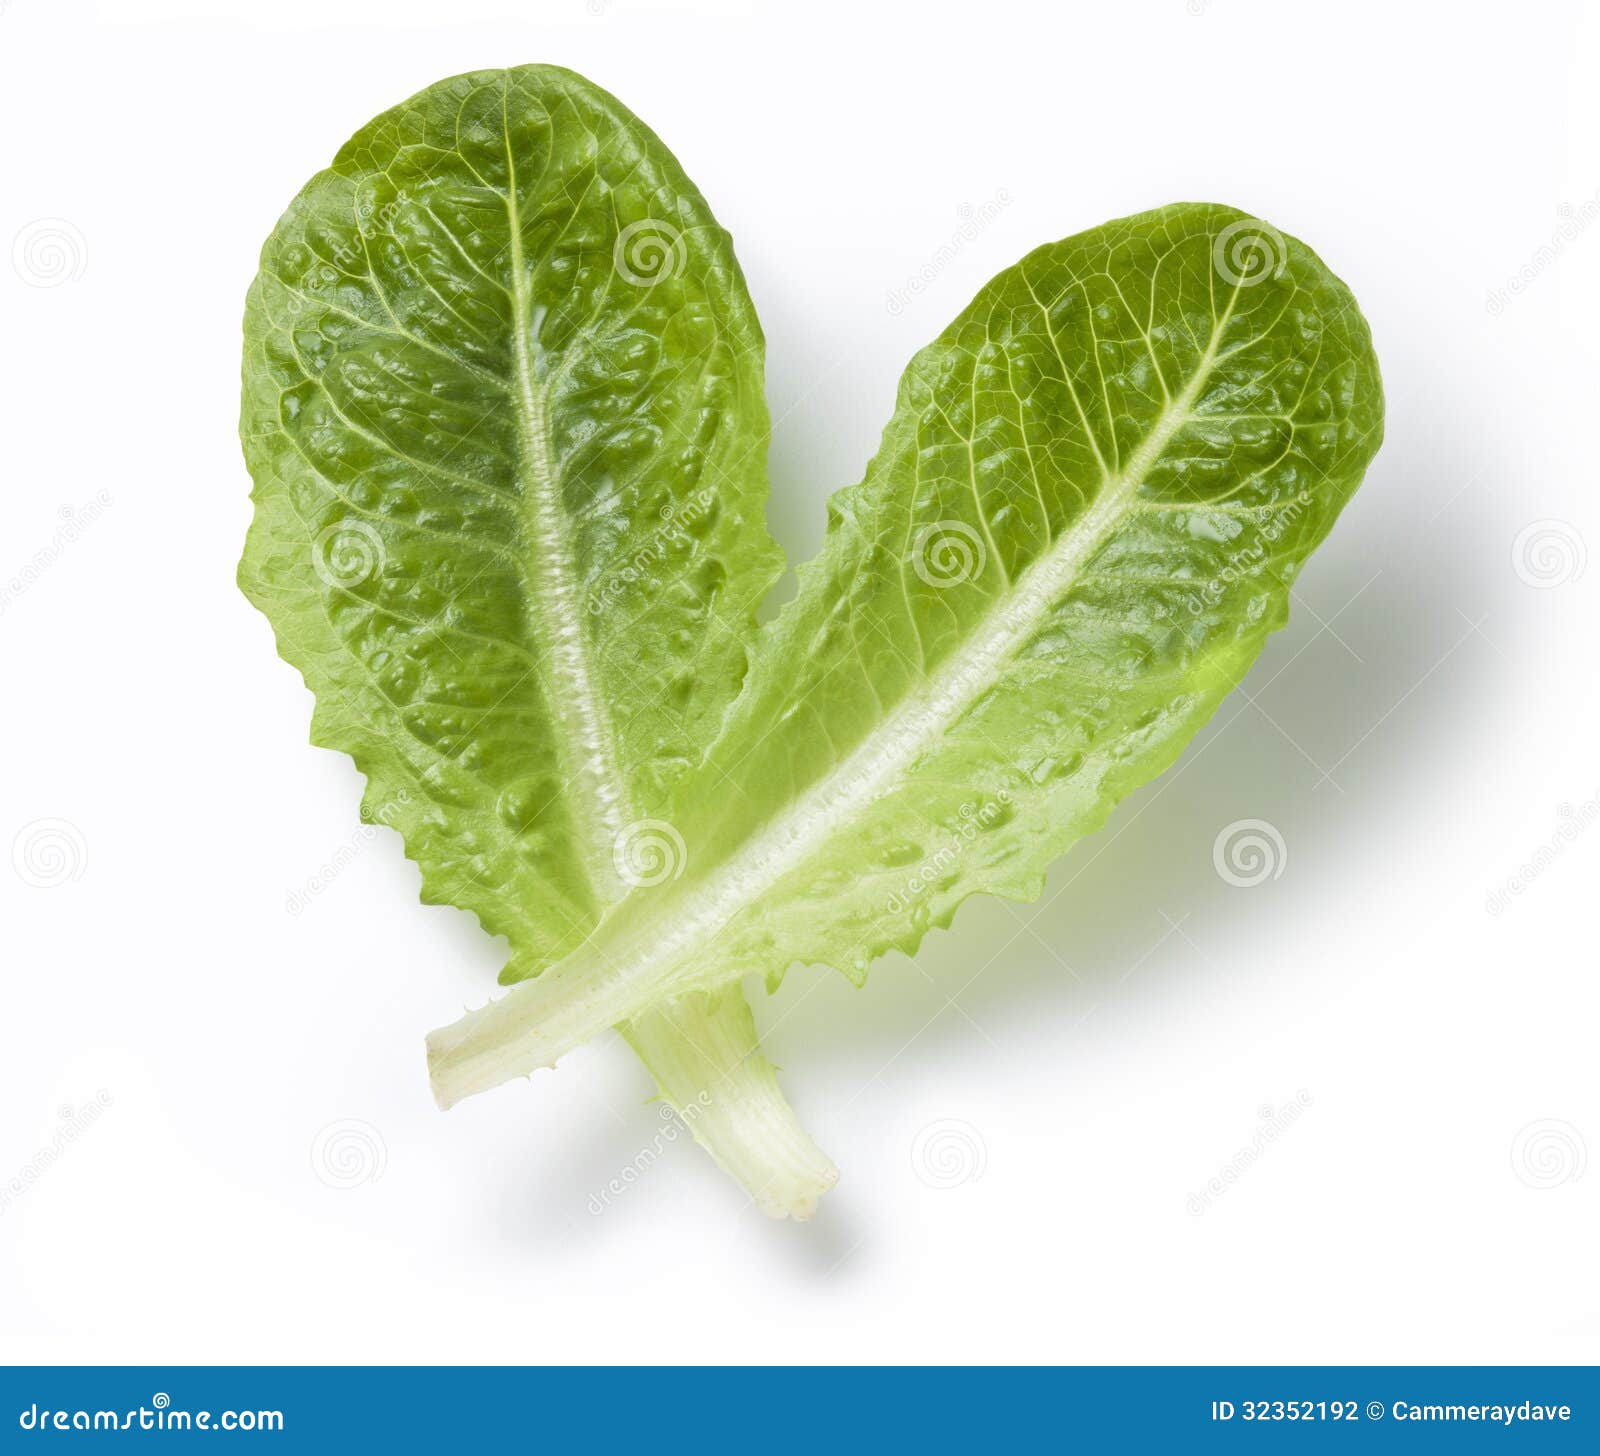 lettuce romaine leaf